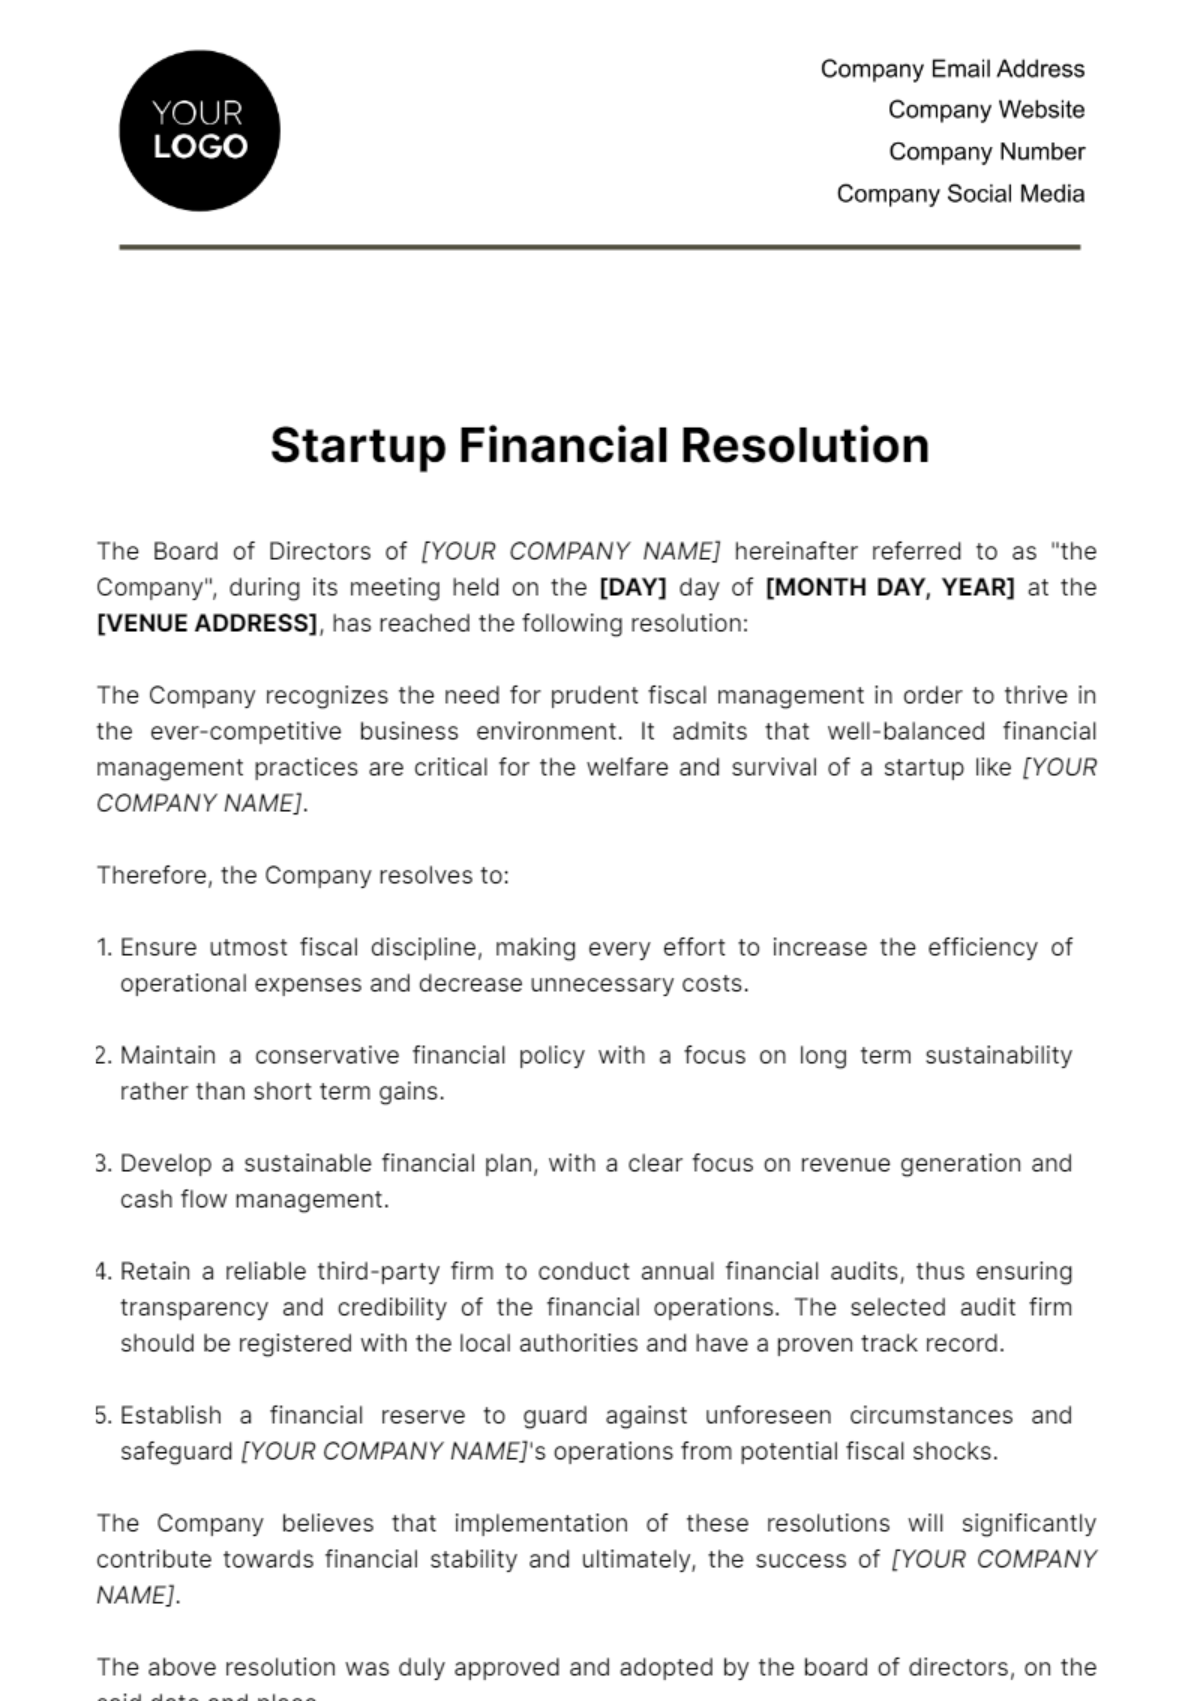 Startup Financial Resolution Template